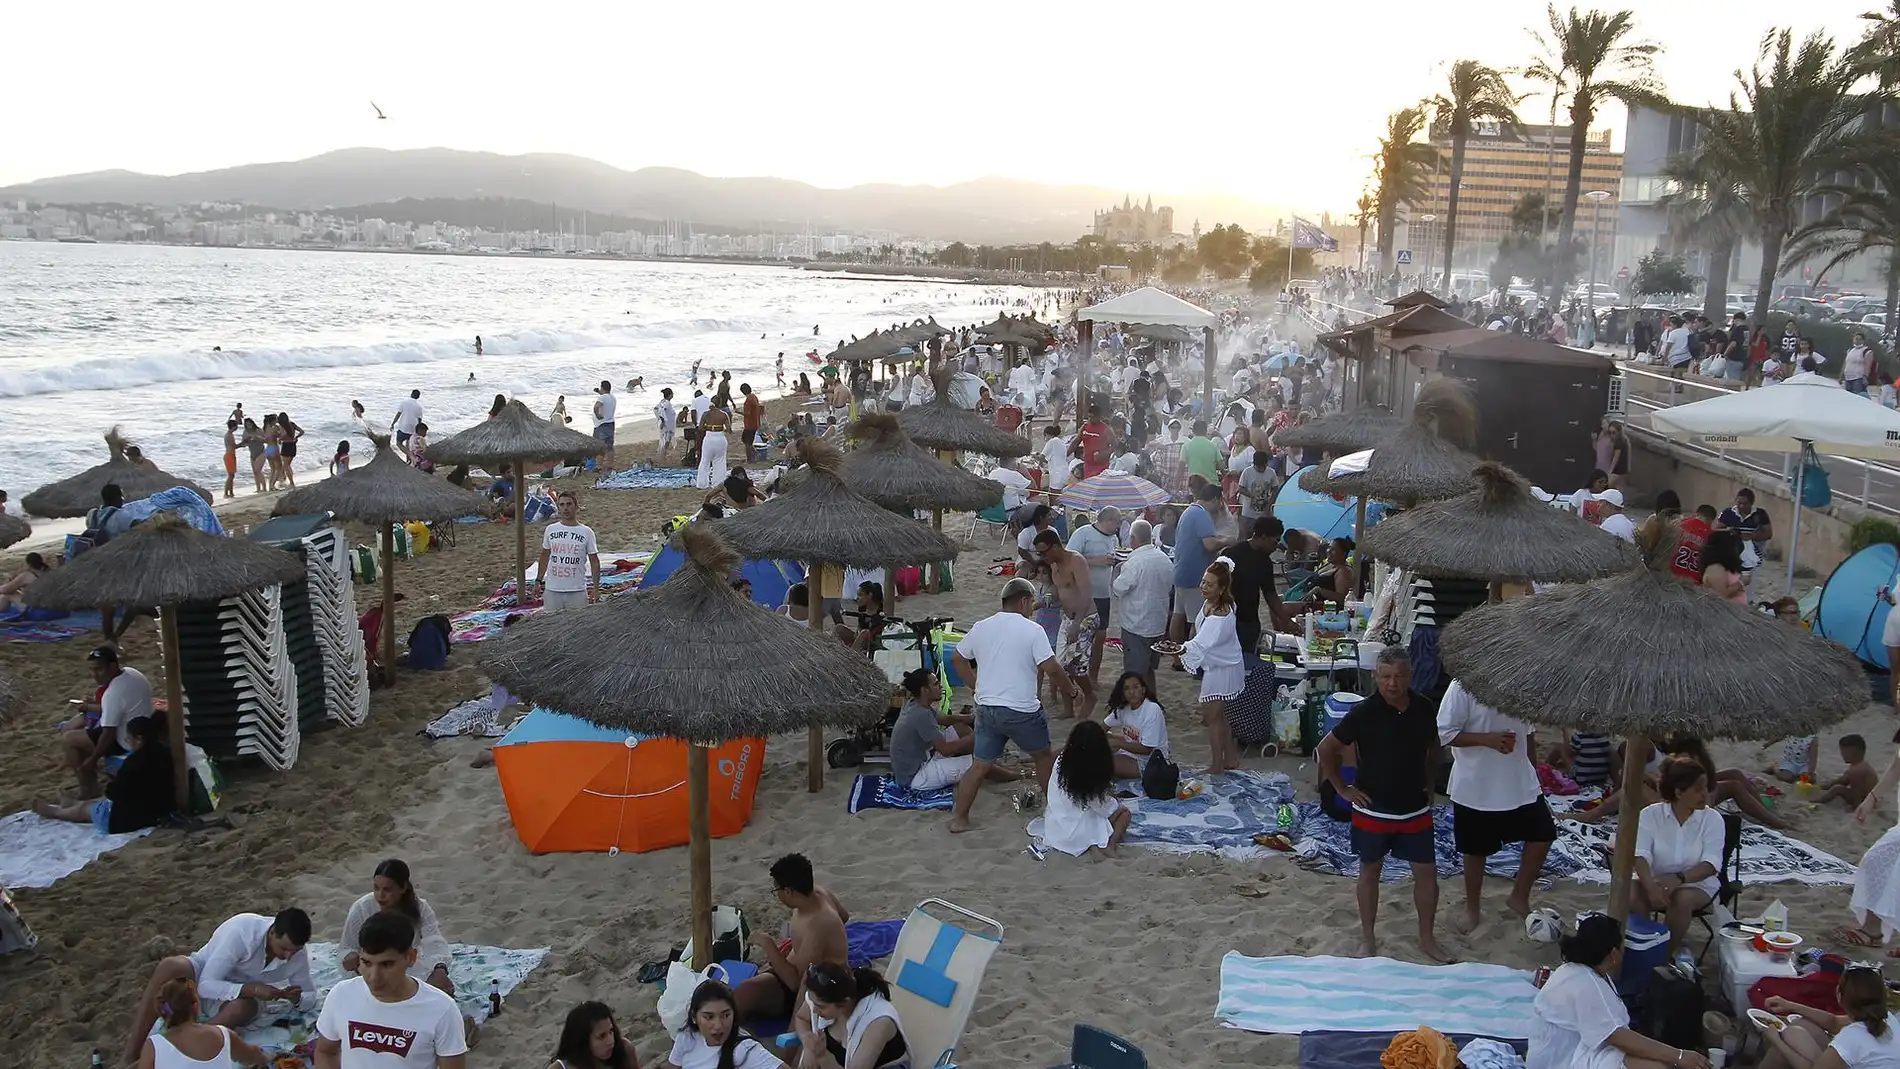  La 'revetla' de San Juan transcurre en Palma sin incidentes destacables